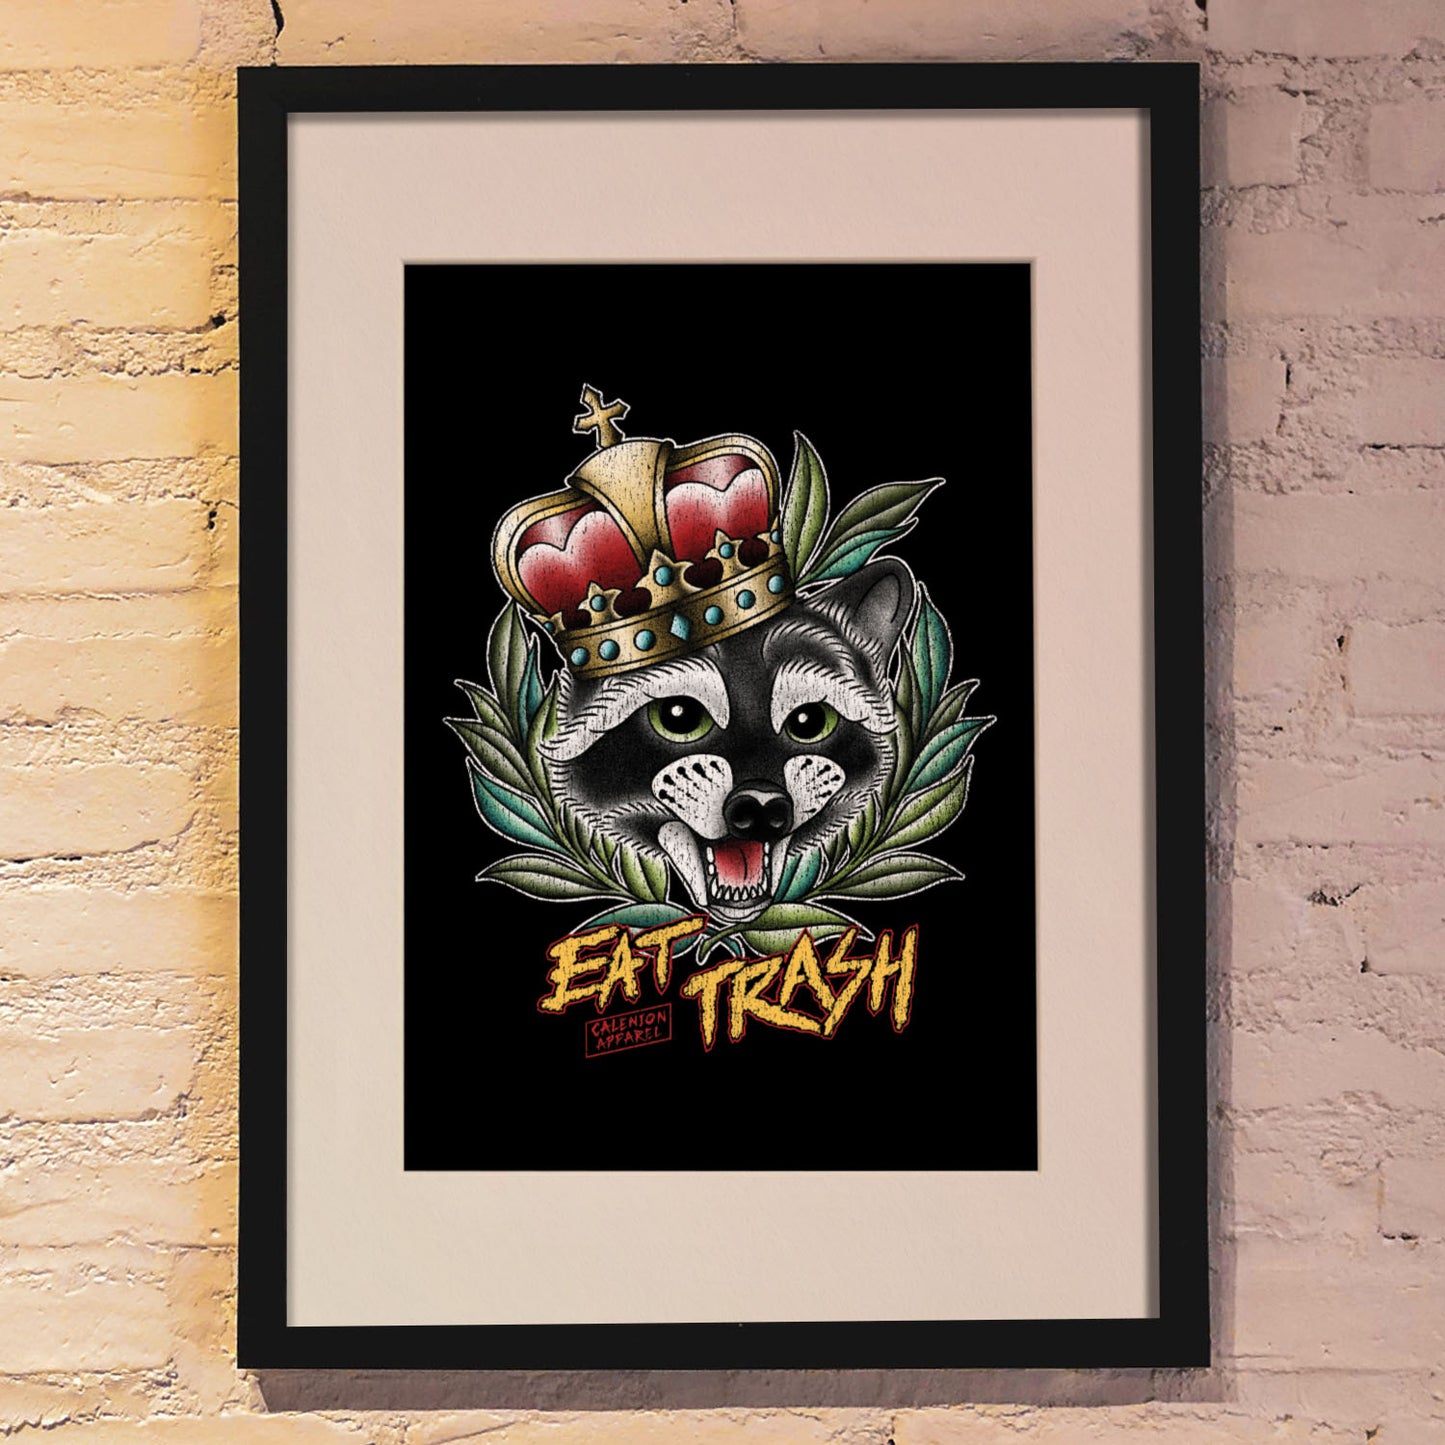 Eat Trash A4 Art Print